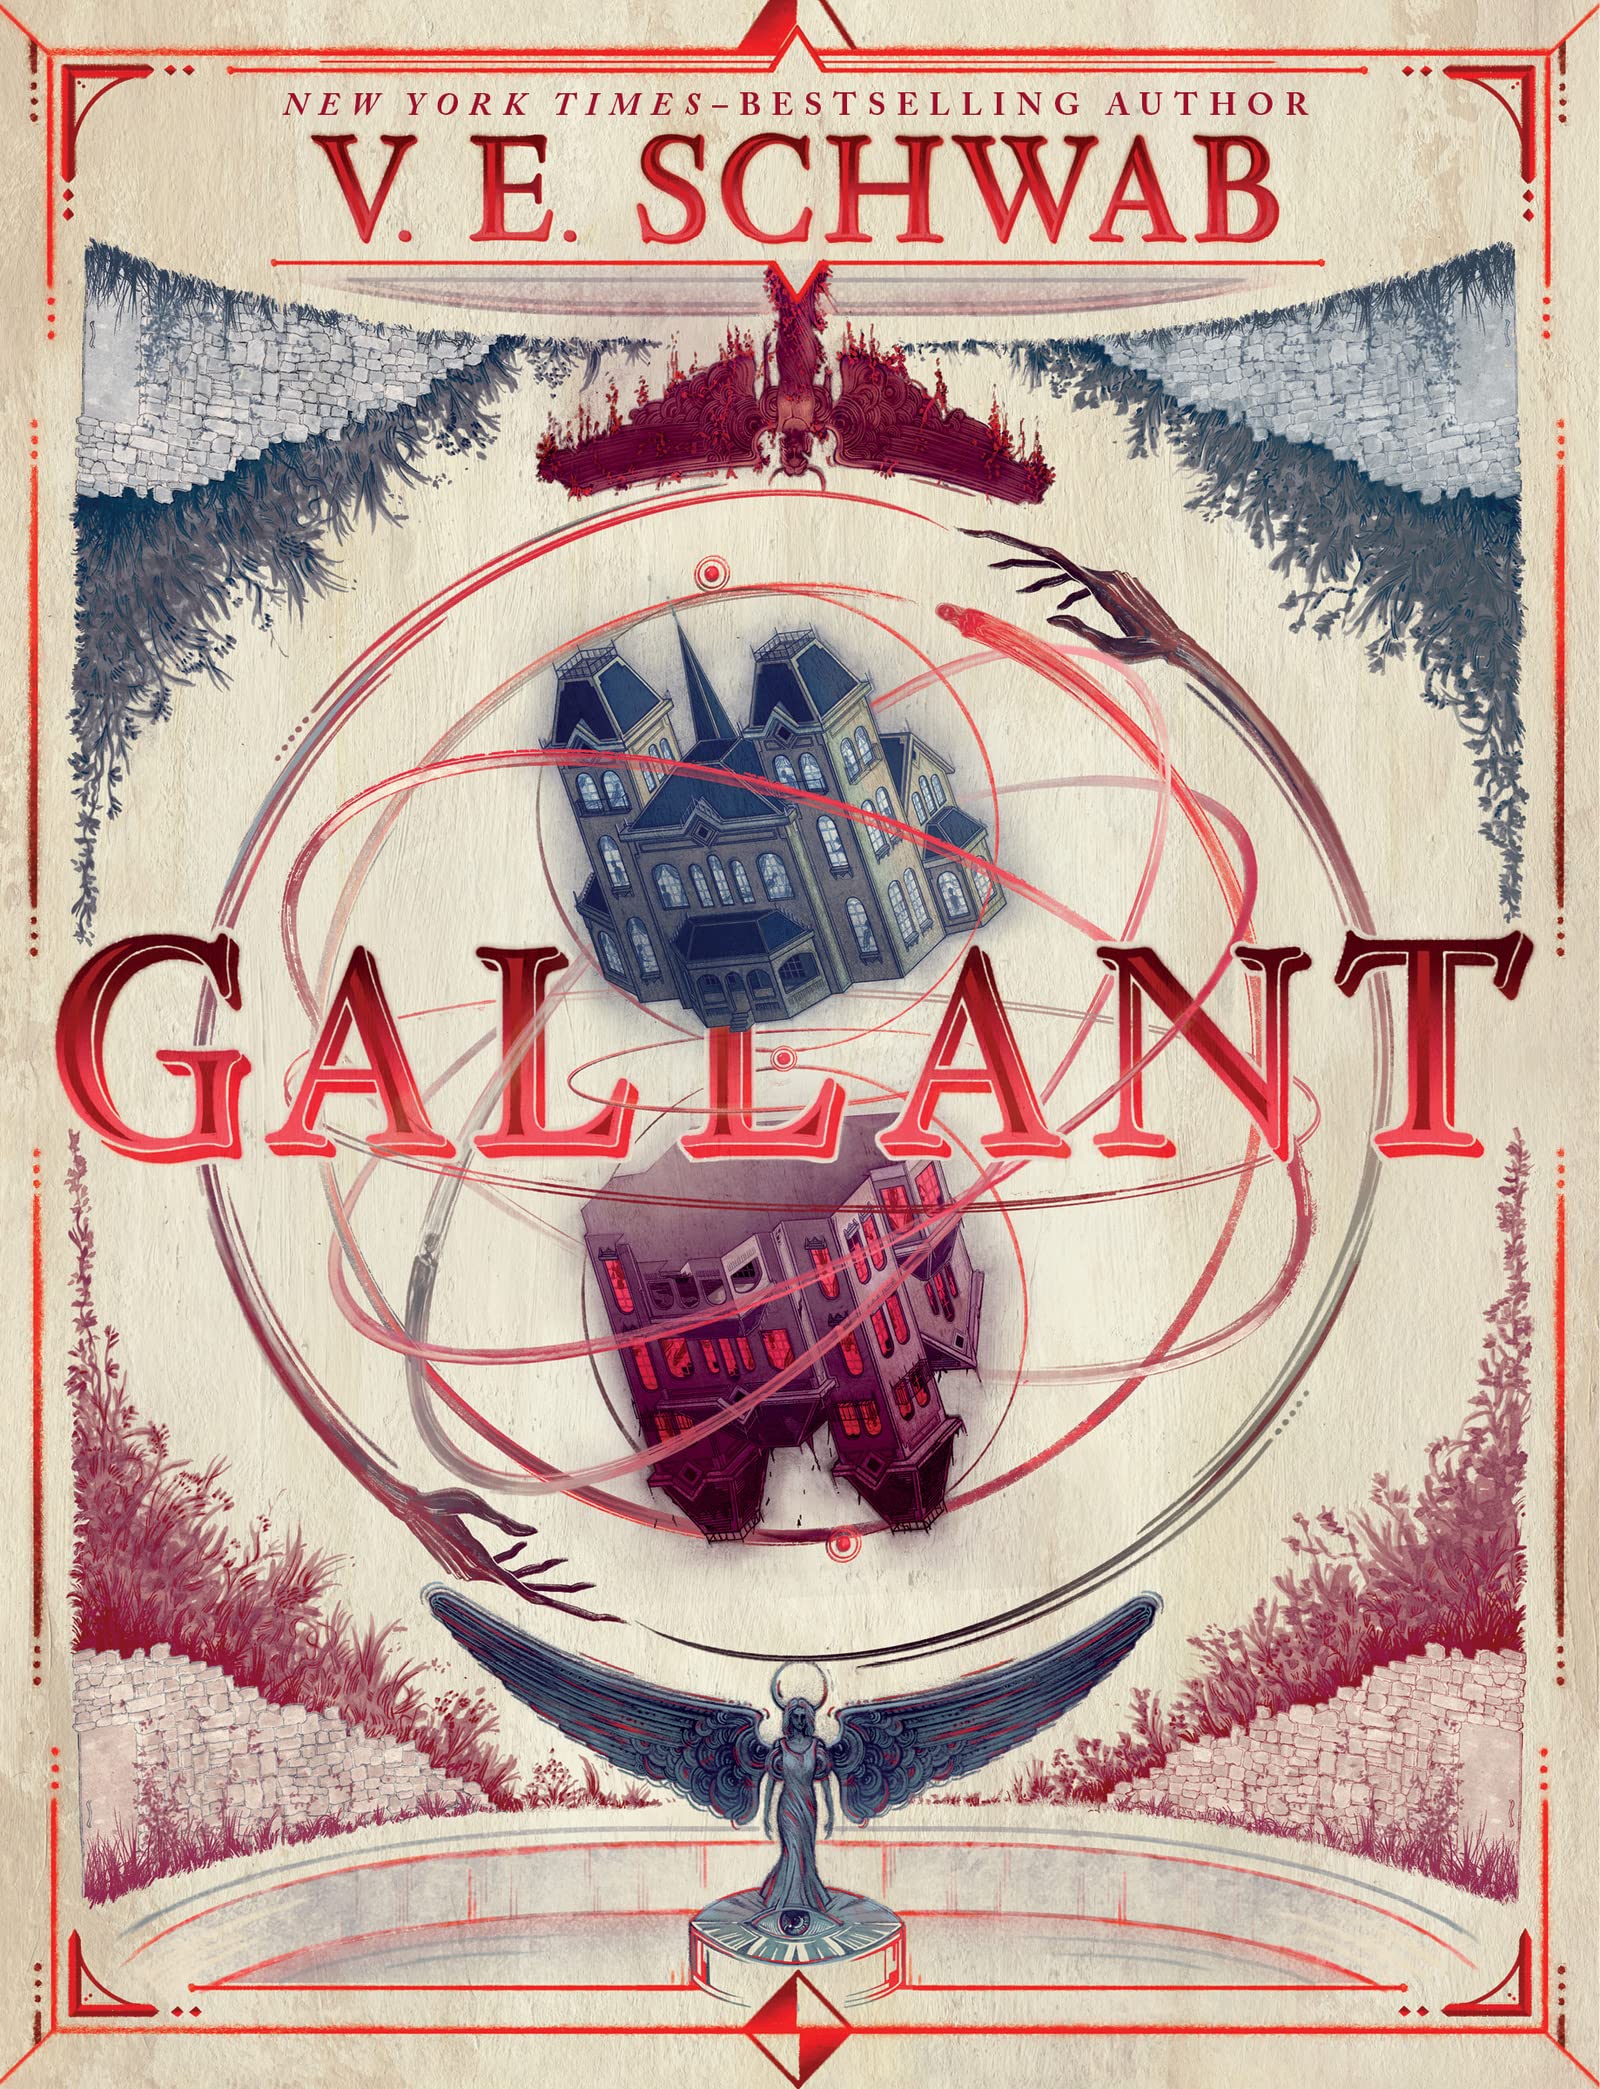 Cover of “Gallant” by V.E. Schwab